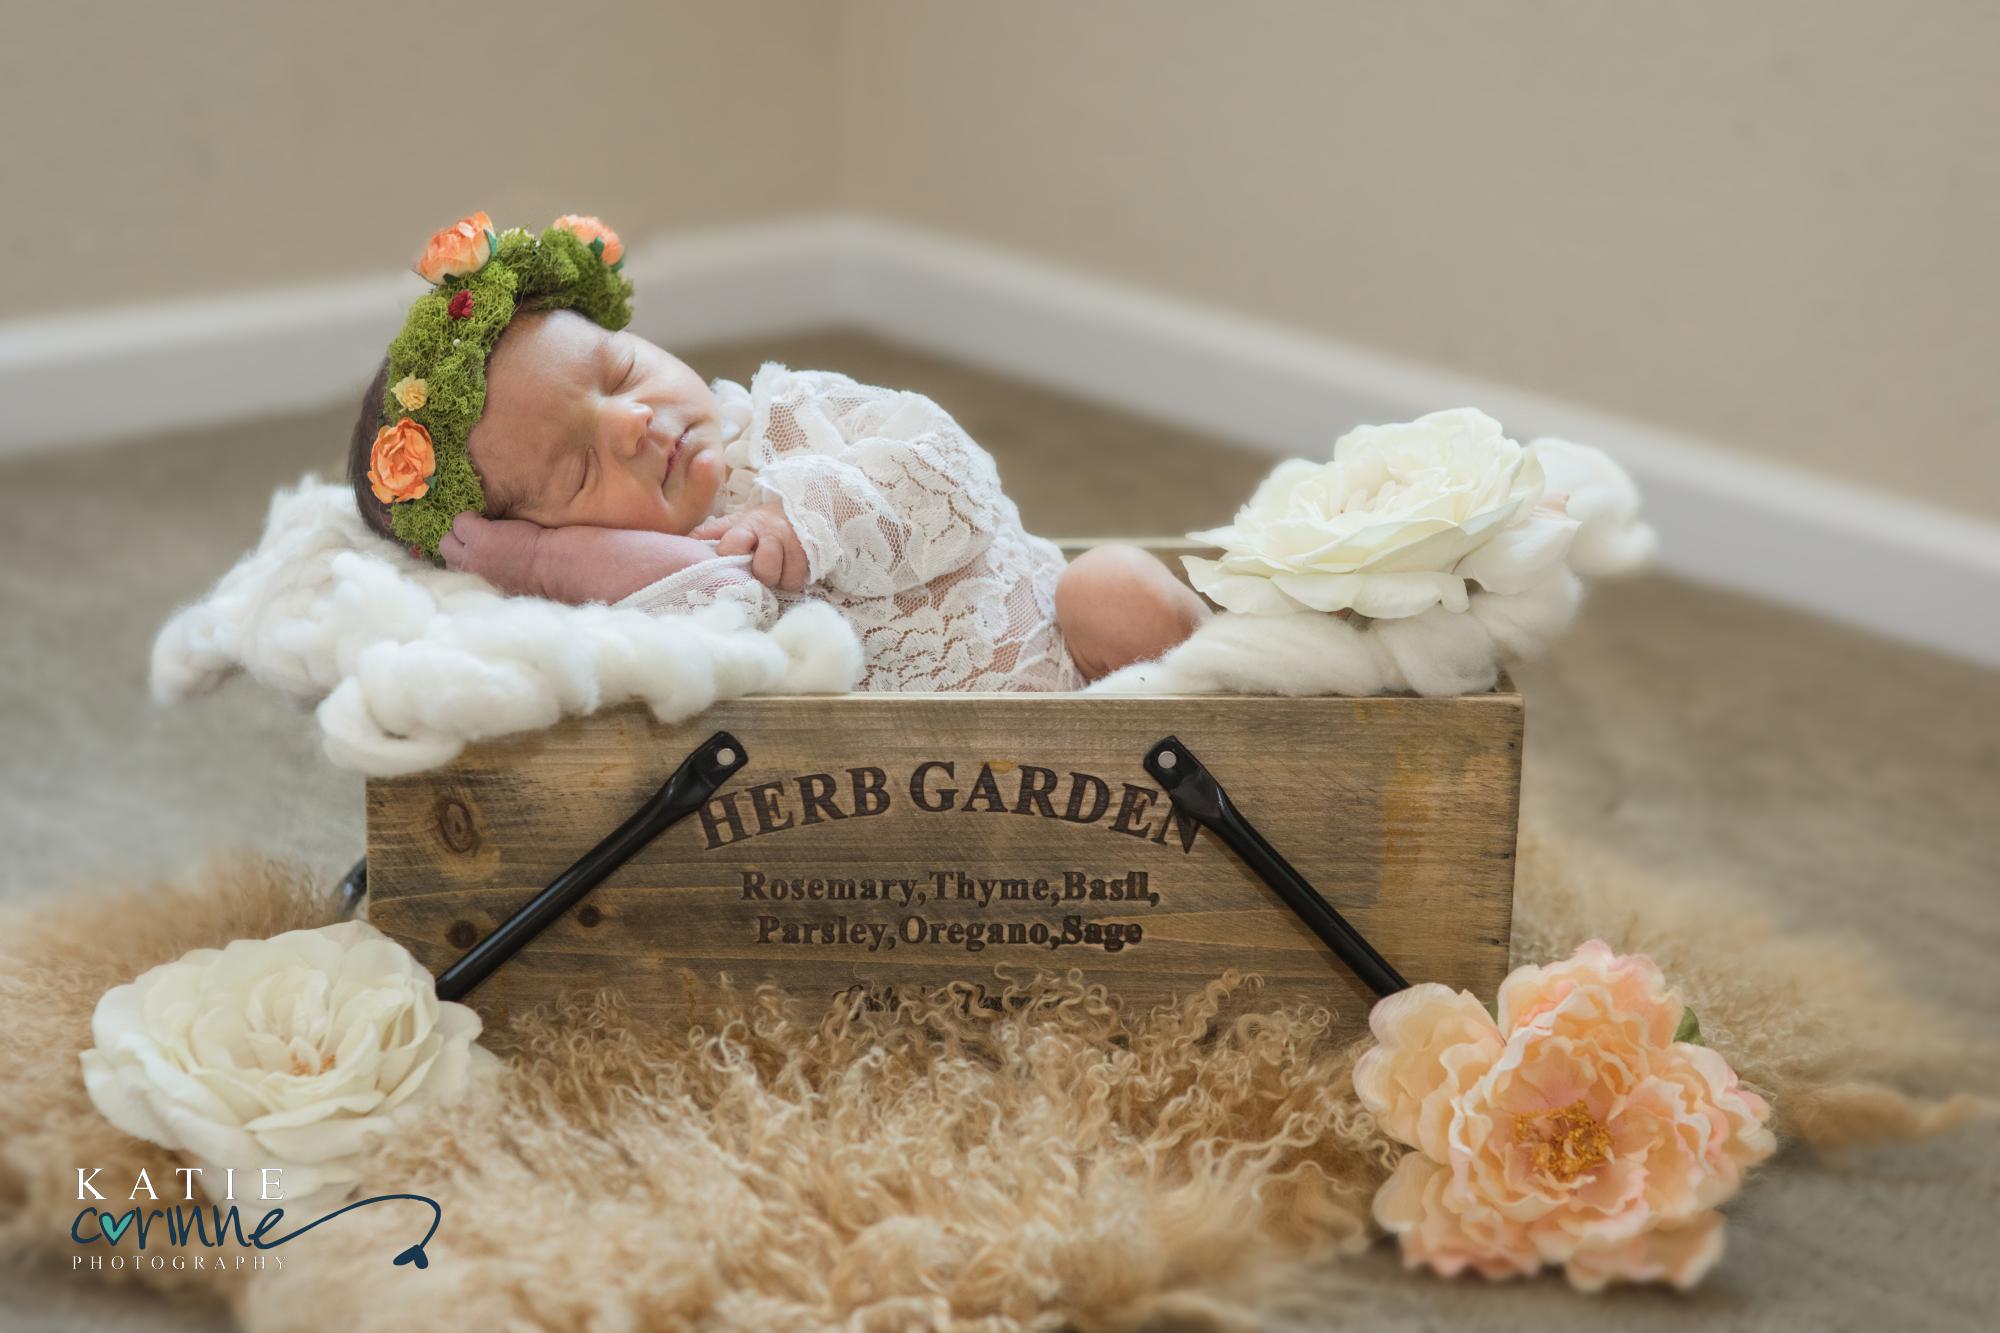 Baby in cute garden box